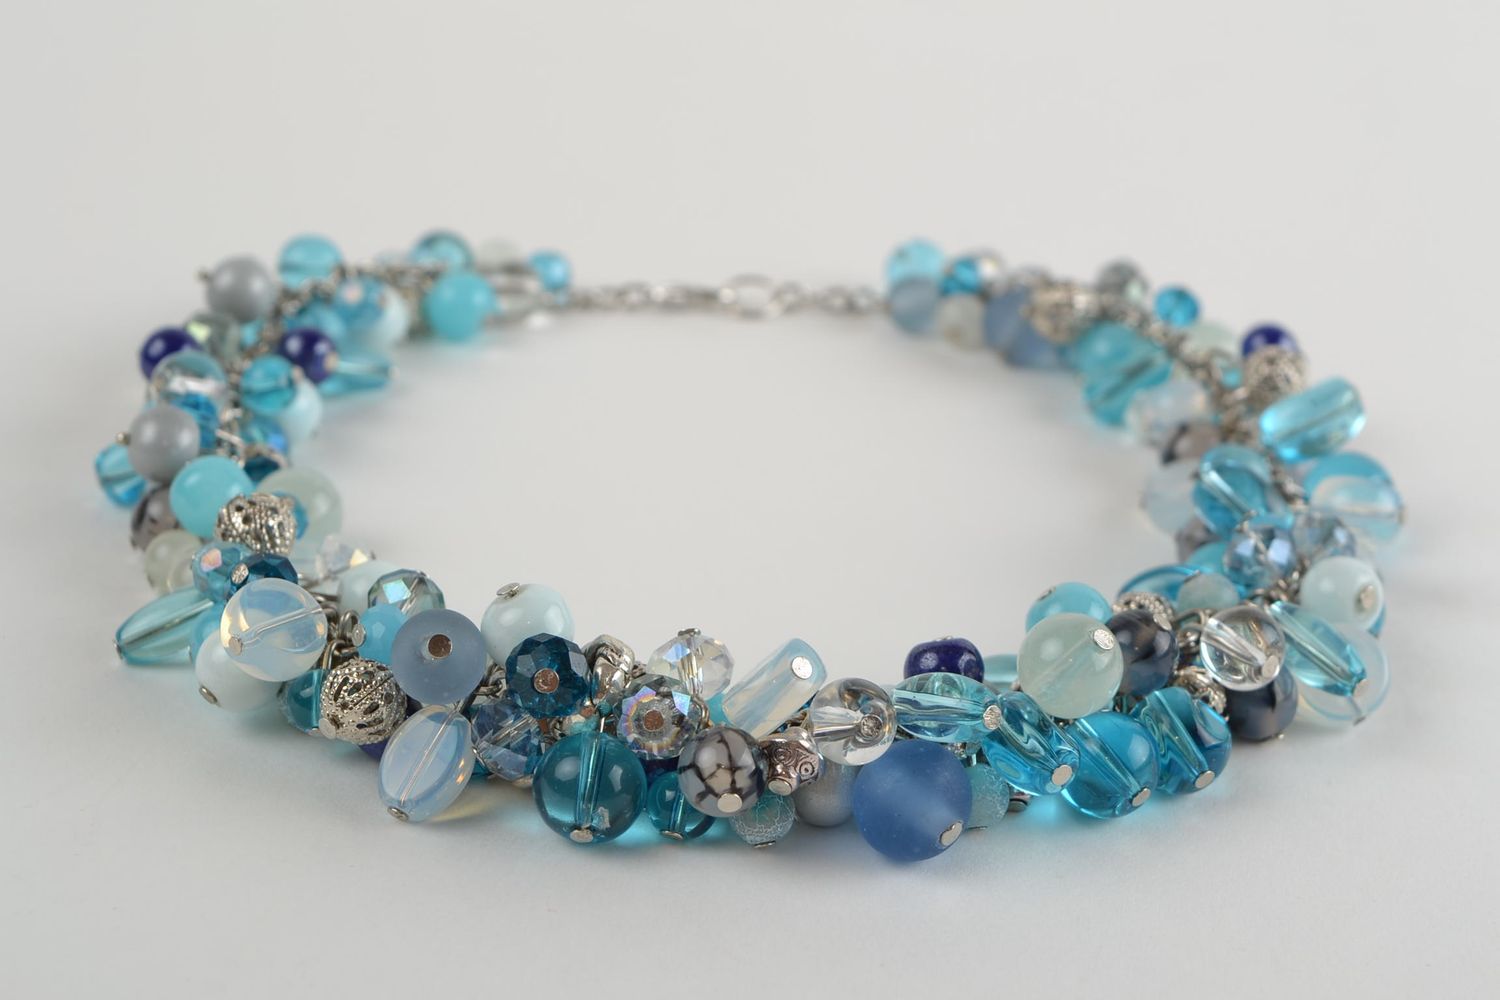 Handmade blue stone and glass bead jewelry set necklace earrings bracelet photo 5